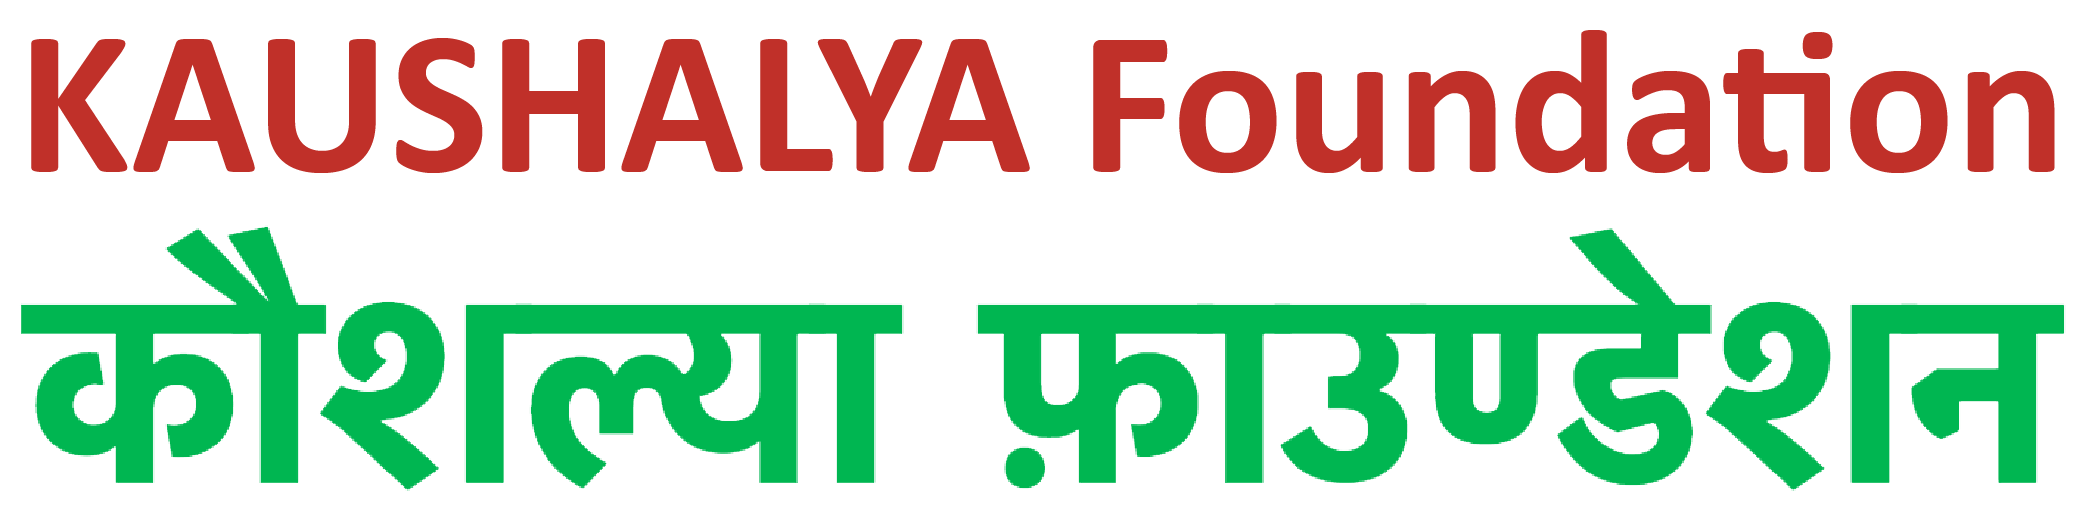 Kaushalya Foundation logo